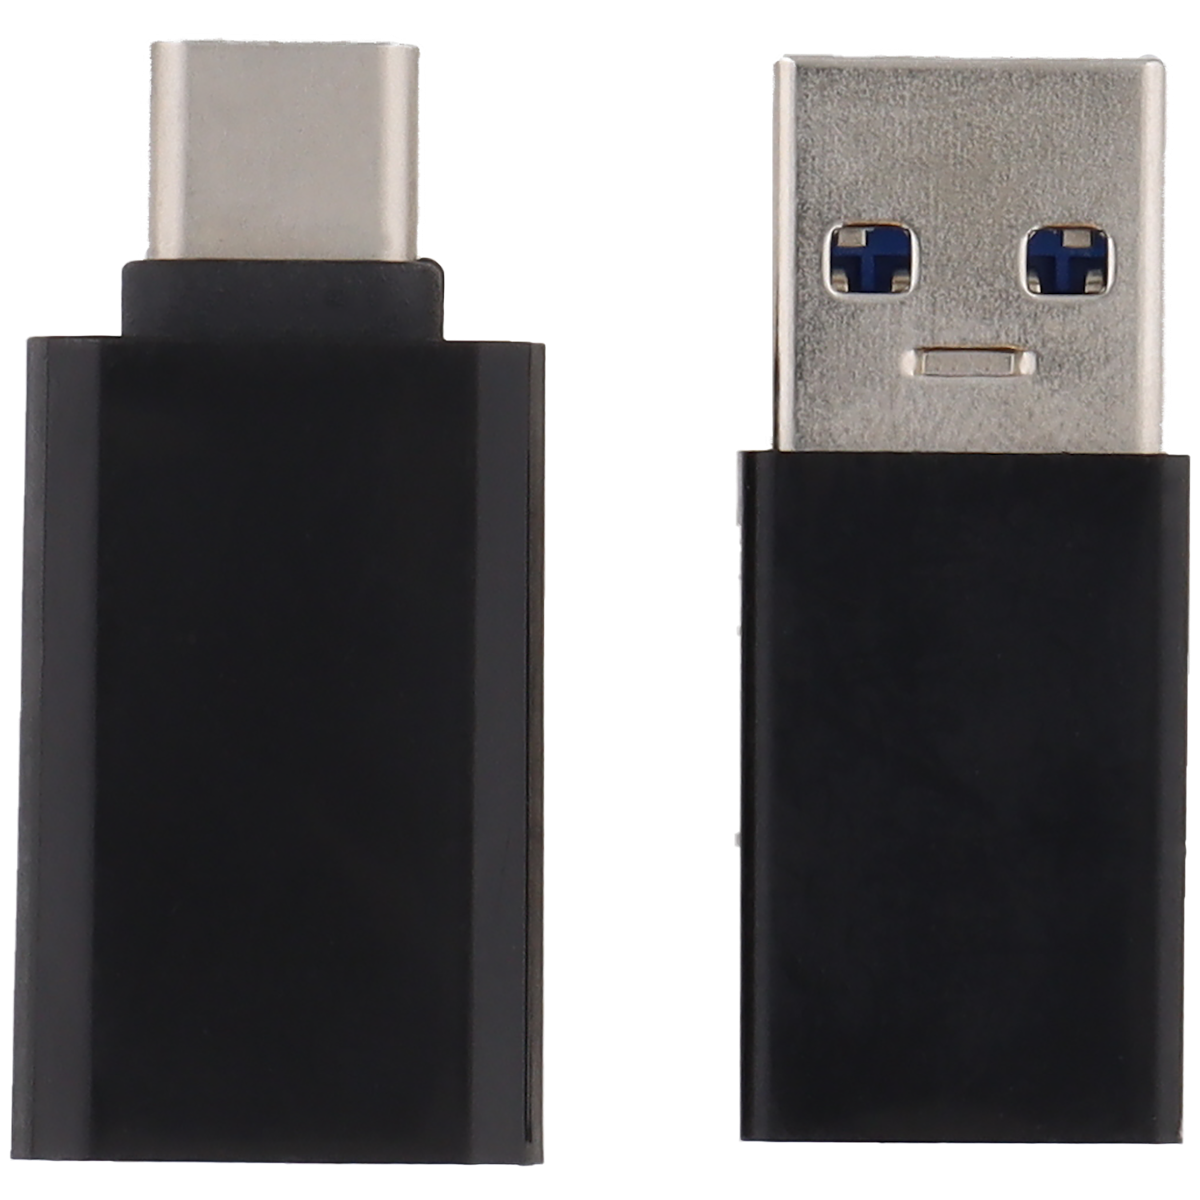 Maxxter USB Typ-C Adapter Set